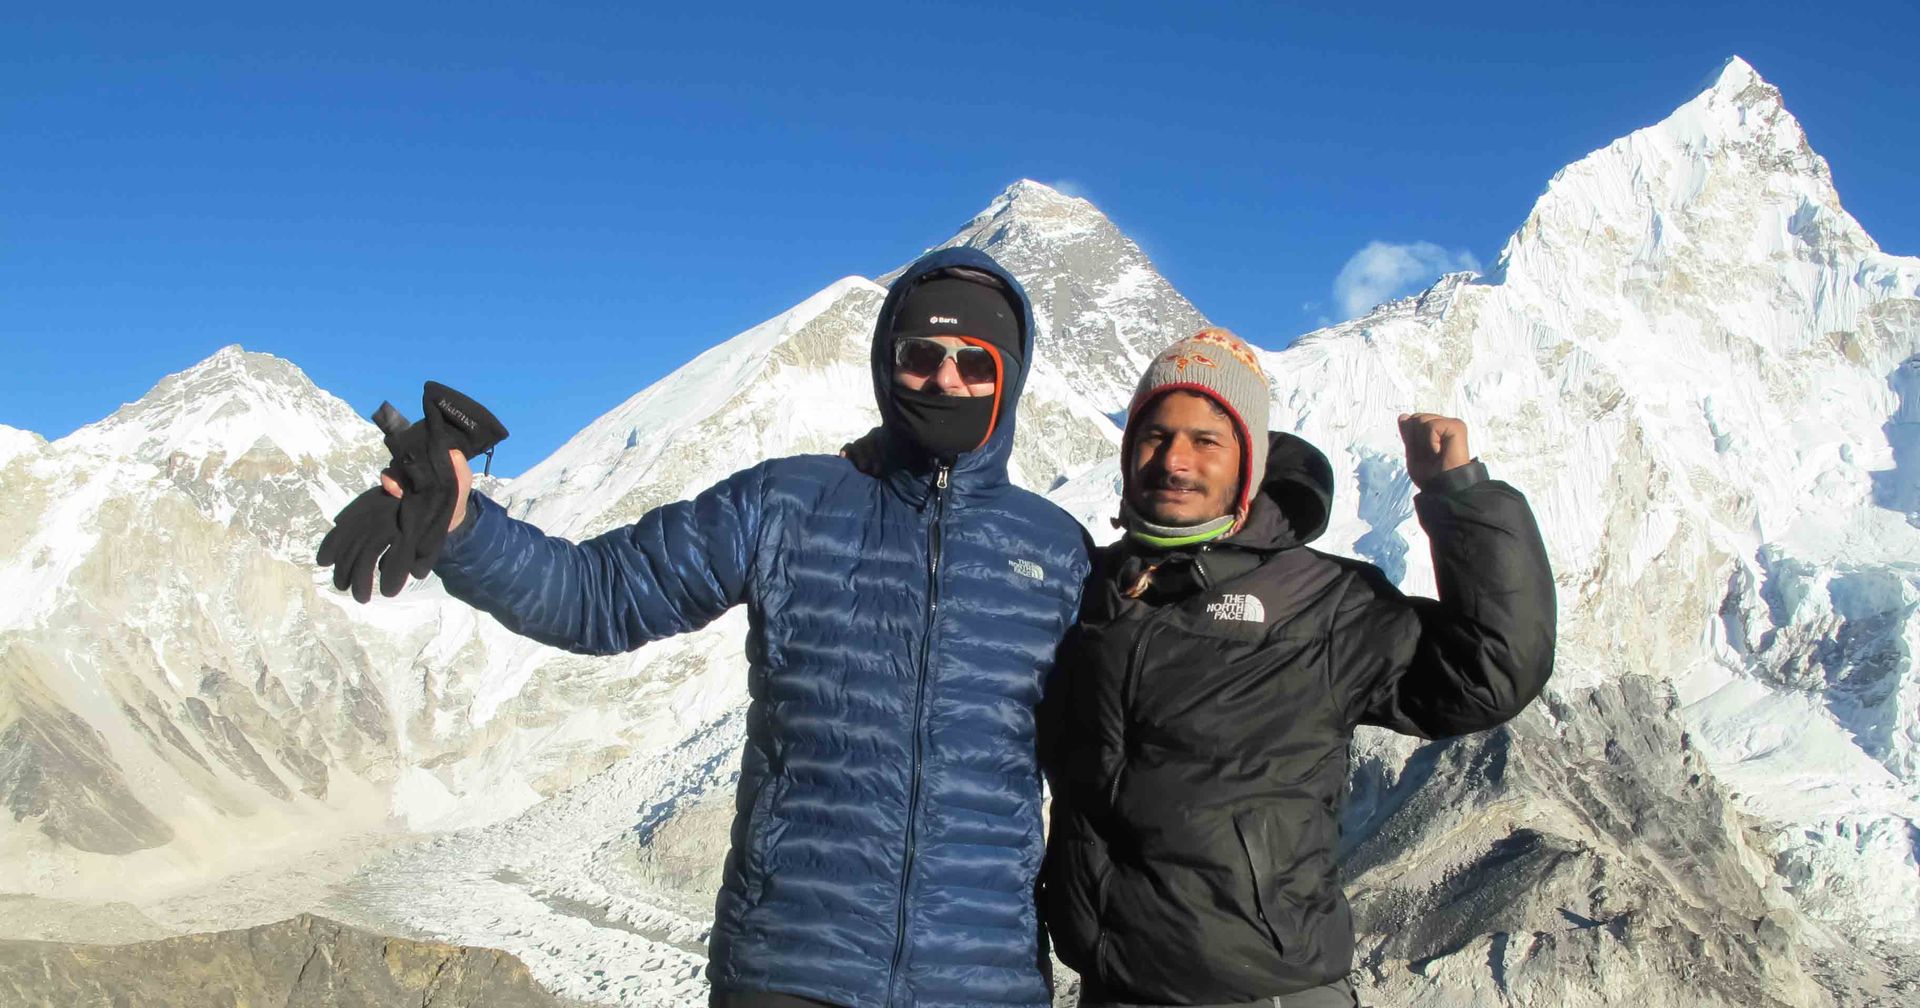 Trekking guide with guest on trek in Nepal